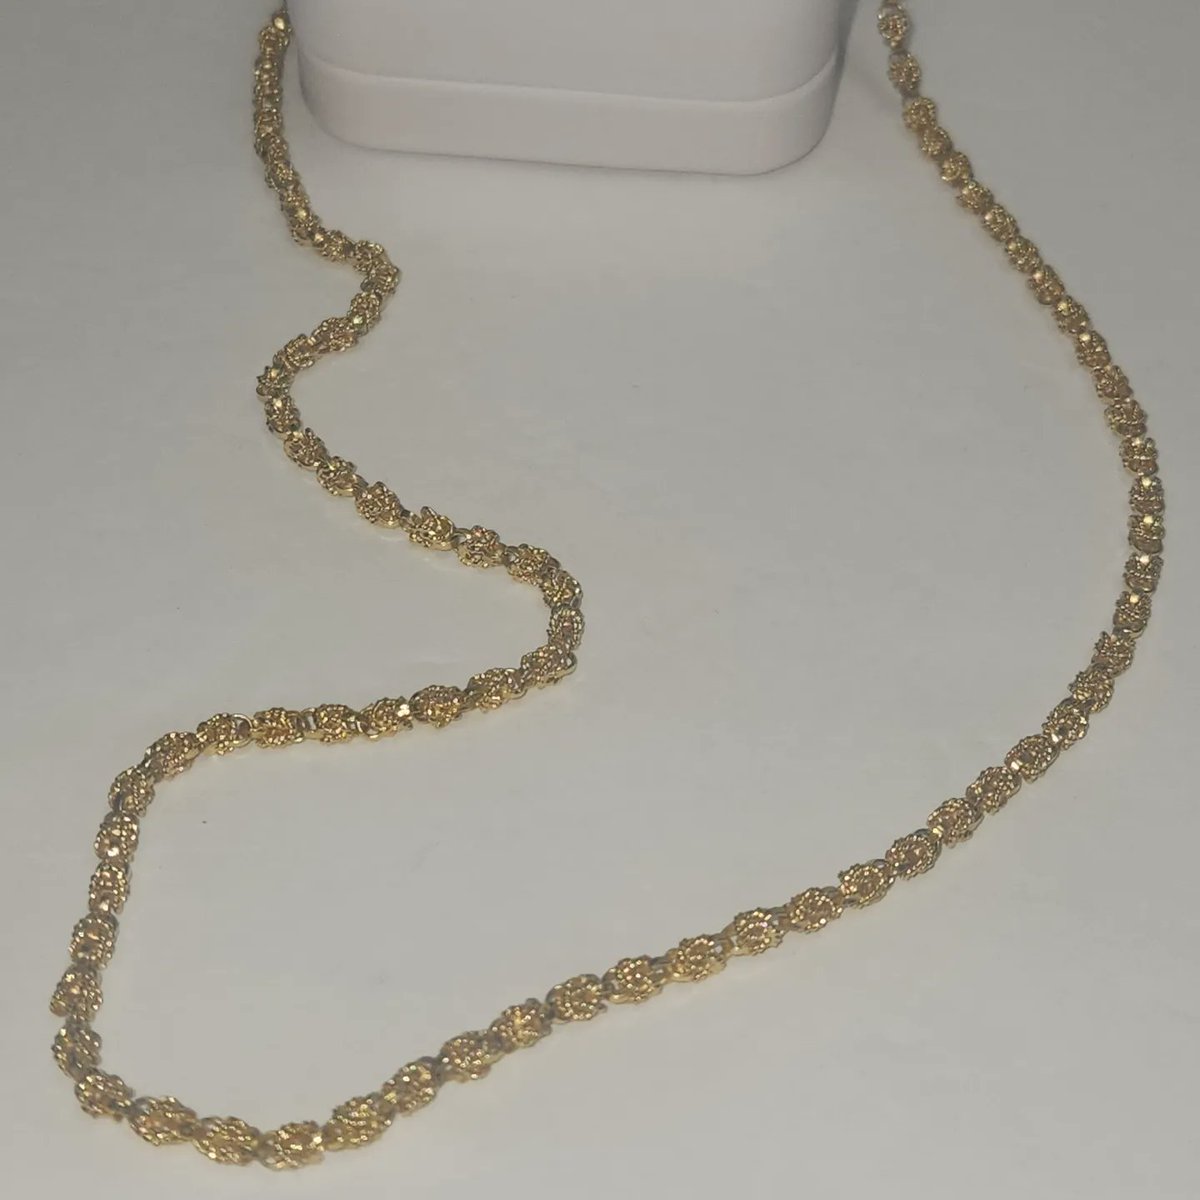 22 karat gold necklace.

#22karatgold #22karat #22karatjewellery #22karatgoldjewelry #goldnecklace #22karatjewelry #goldchain #glendaleca #glendalecalifornia #jewelryshop #jewelleryshop #jeweleryshop #jewellery  #goldstore #goldbusiness #goldshop #jewelry #jewelery #smallshop